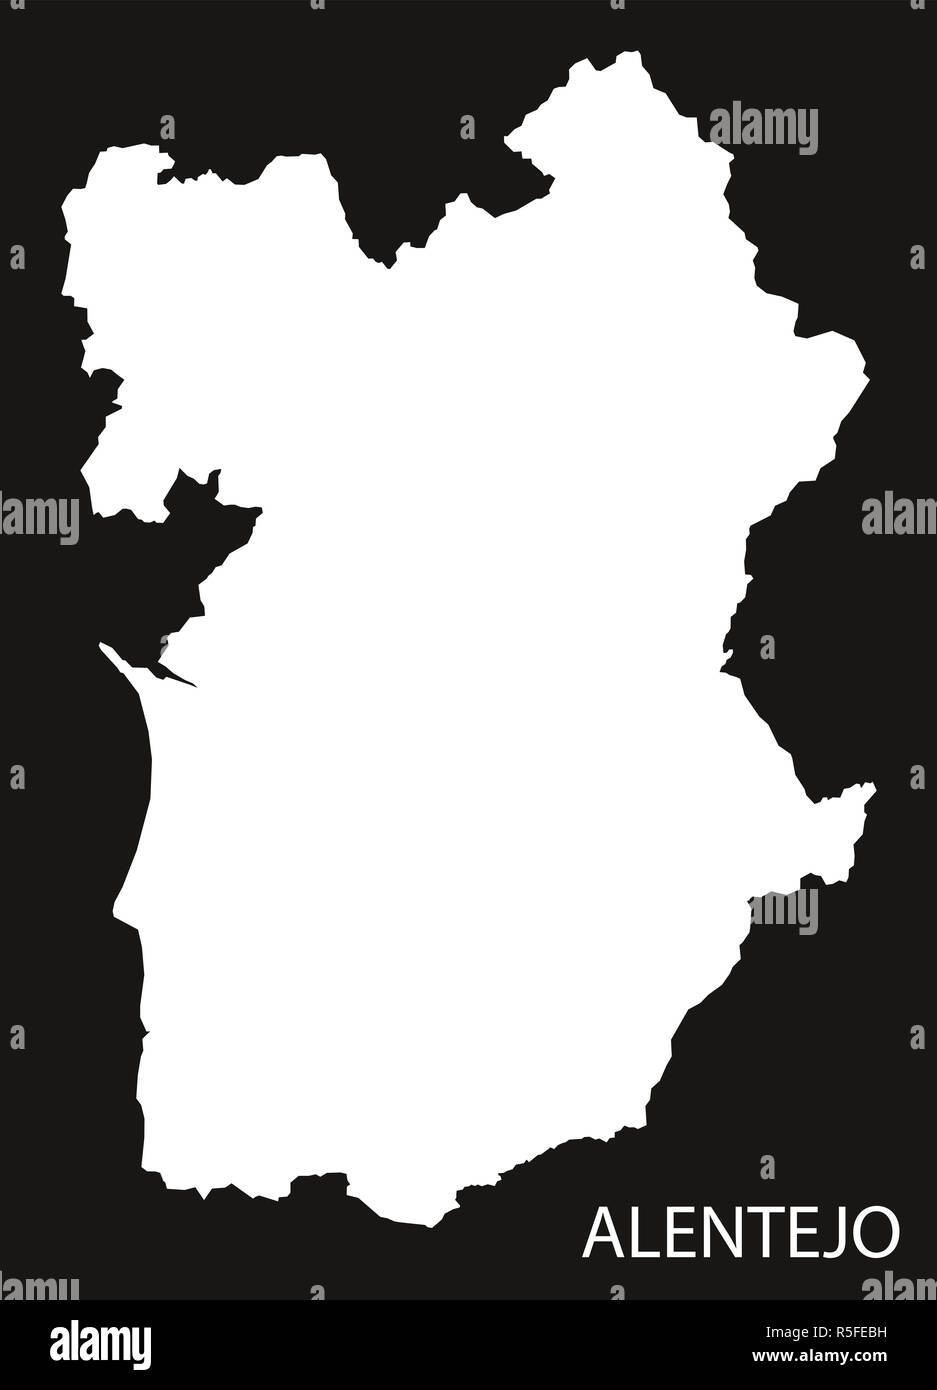 Alentejo Portugal map black inverted silhouette illustration shape Stock Photo